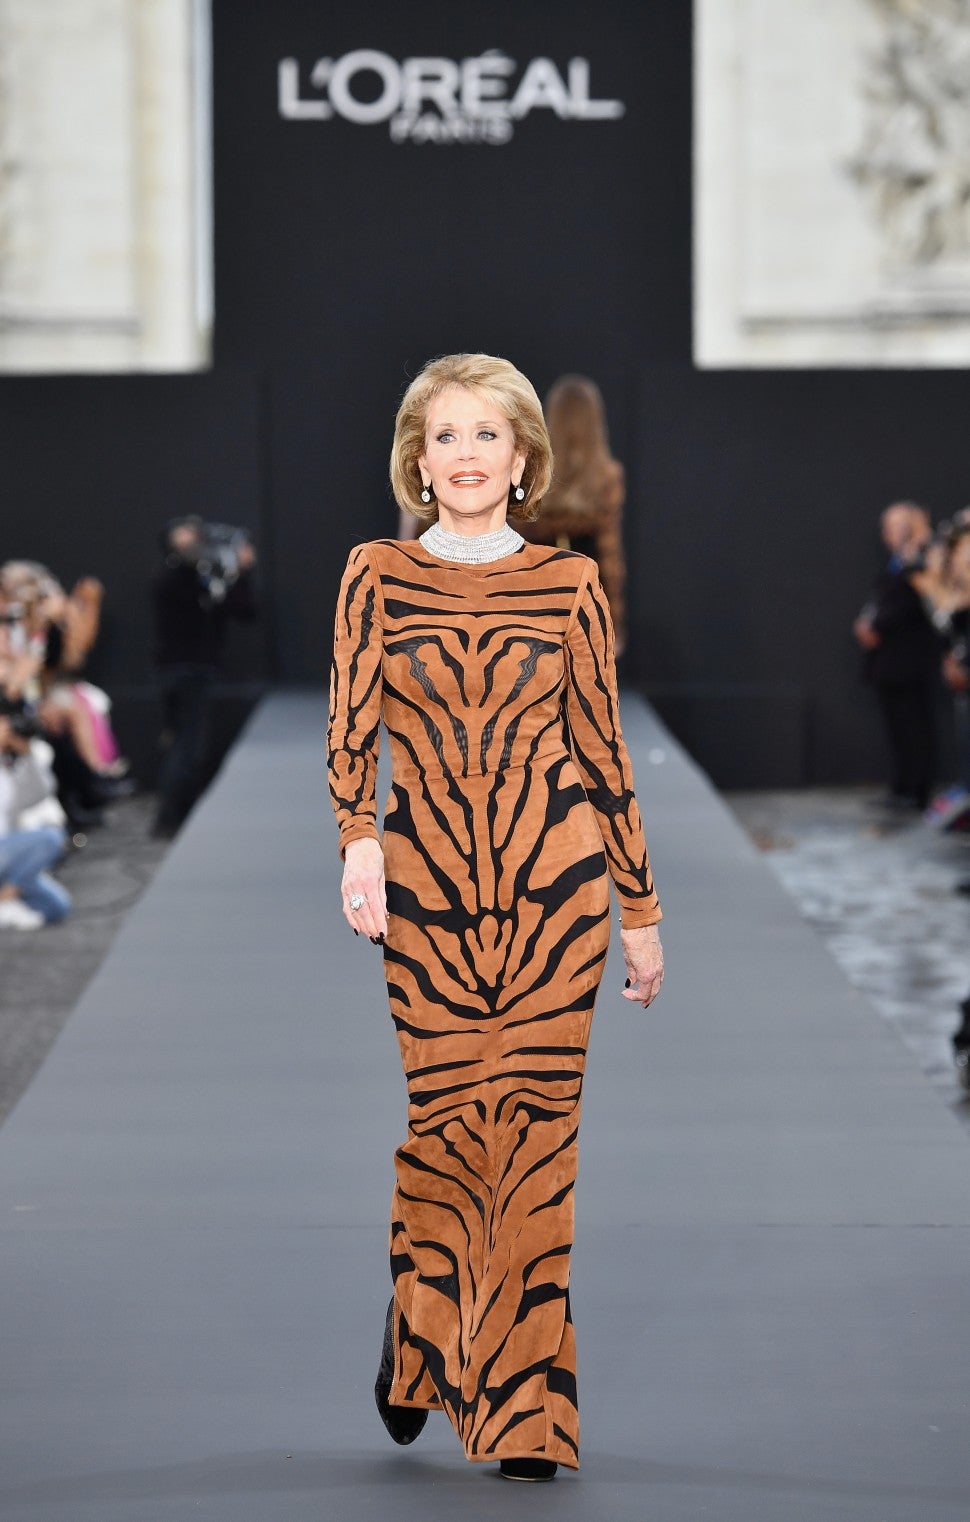 Jane Fonda walks the runway at Paris Fashion Week 2017